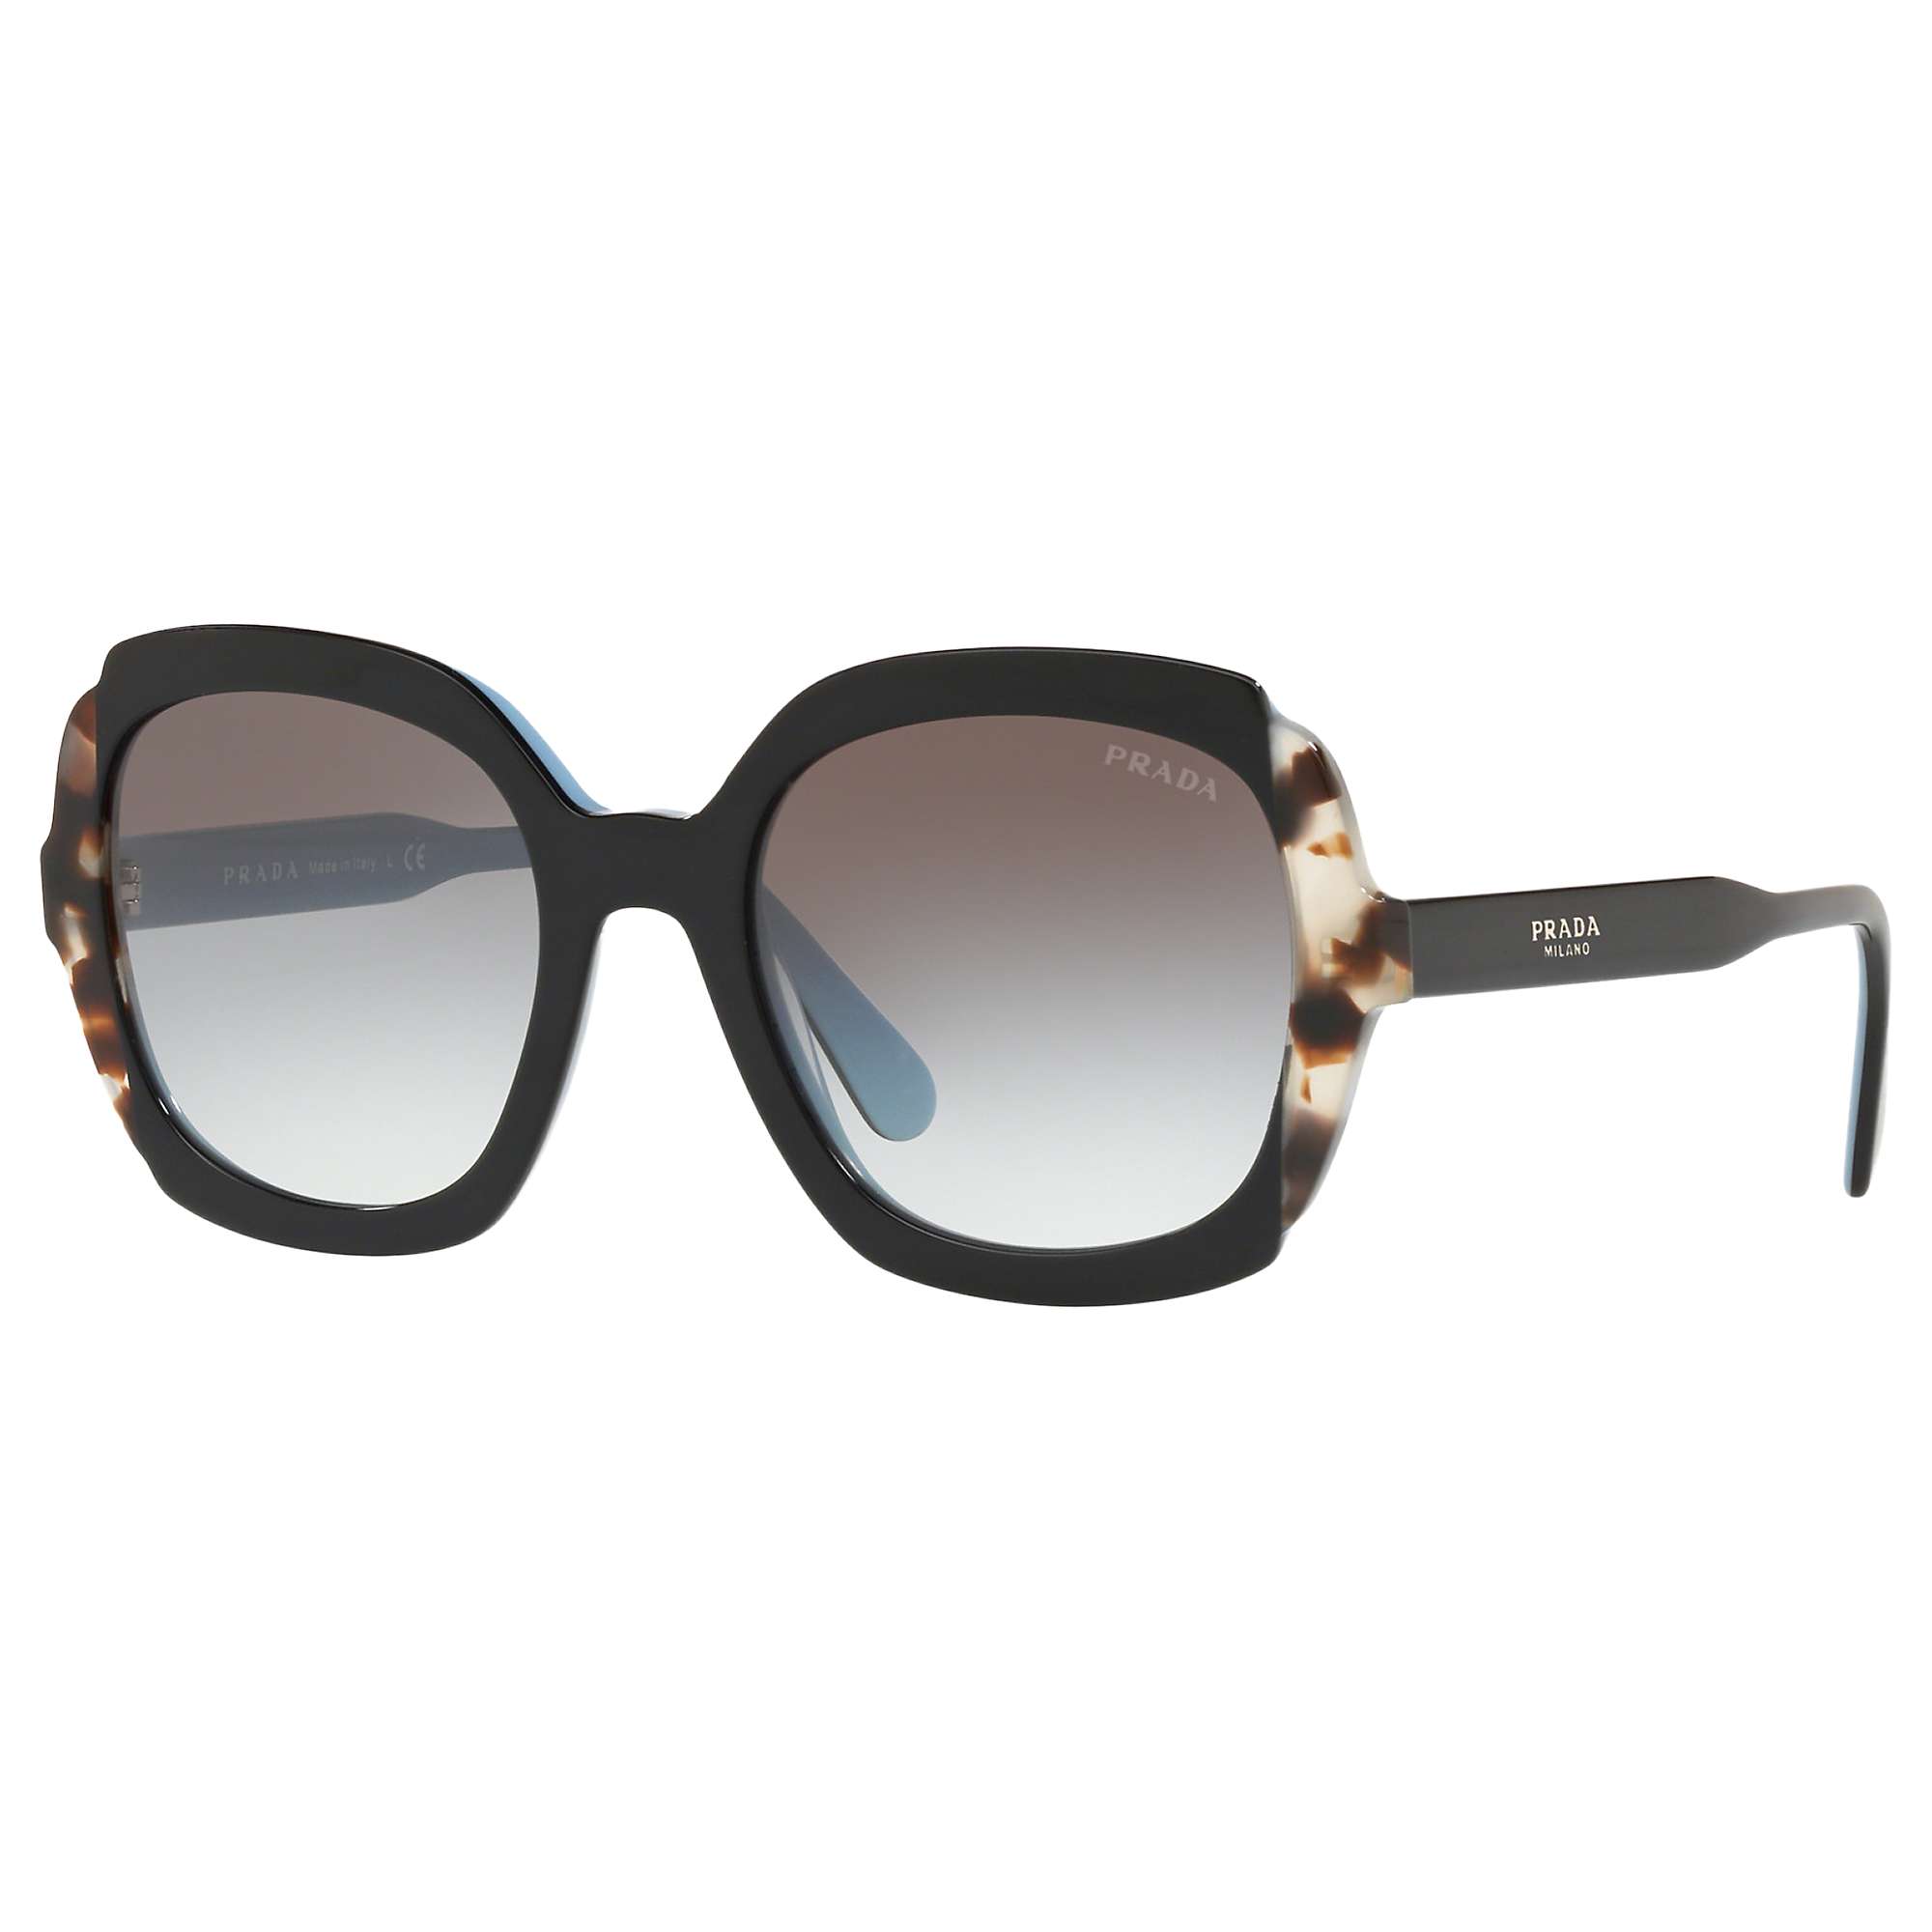 Buy Prada 16US Women's Square Sunglasses Online at johnlewis.com